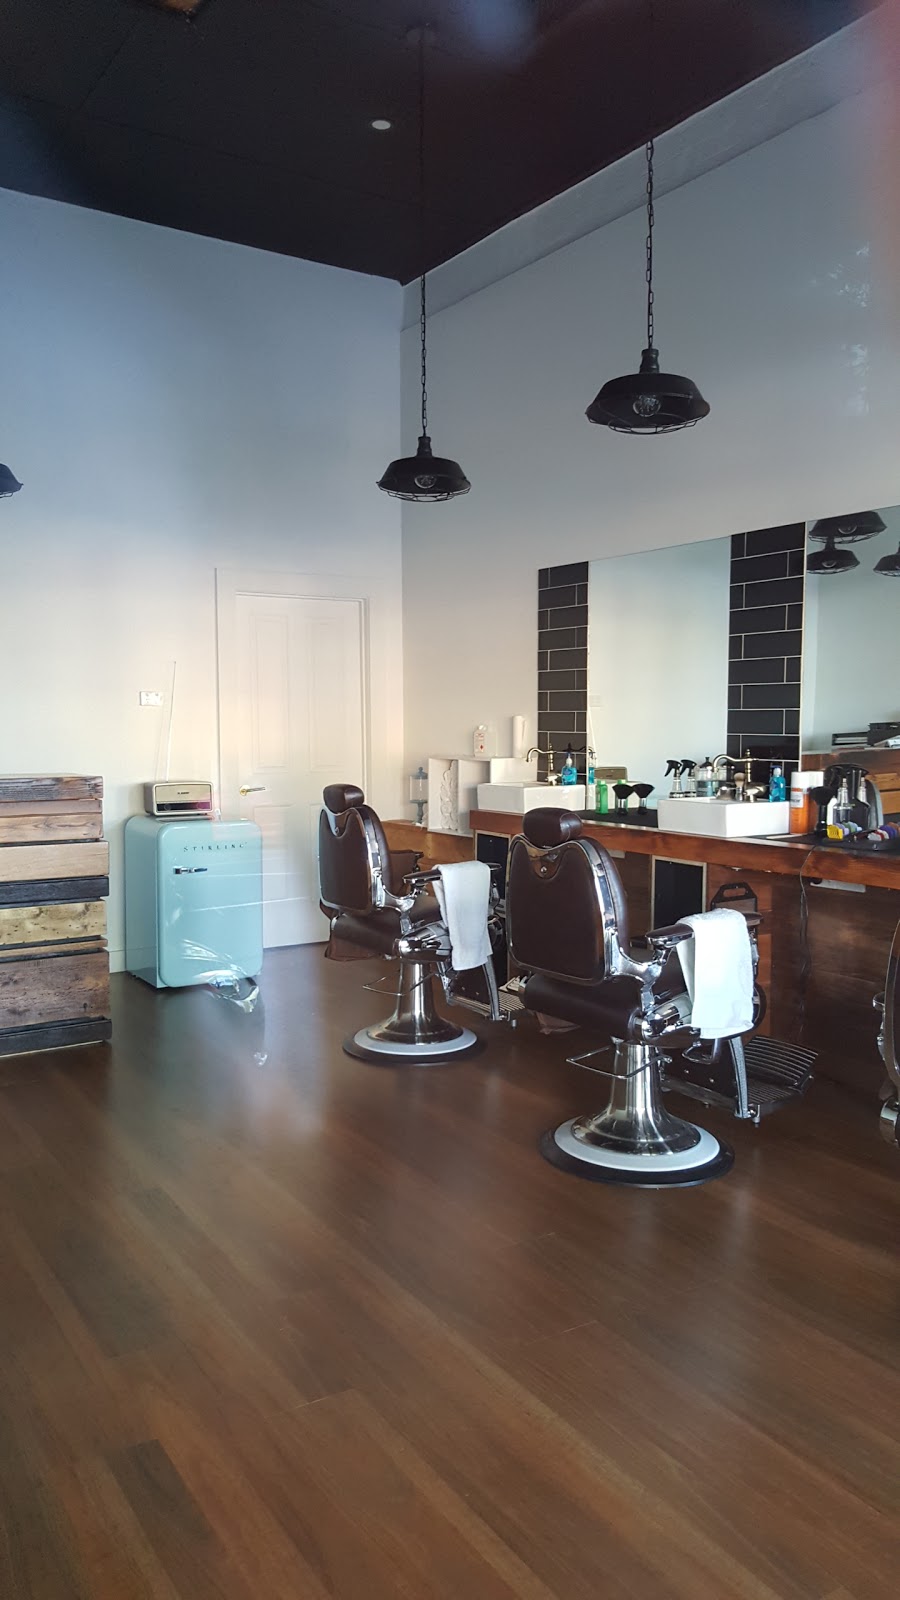 Barber On Bellair | hair care | 184 Bellair St, Kensington VIC 3031, Australia | 0390425965 OR +61 3 9042 5965